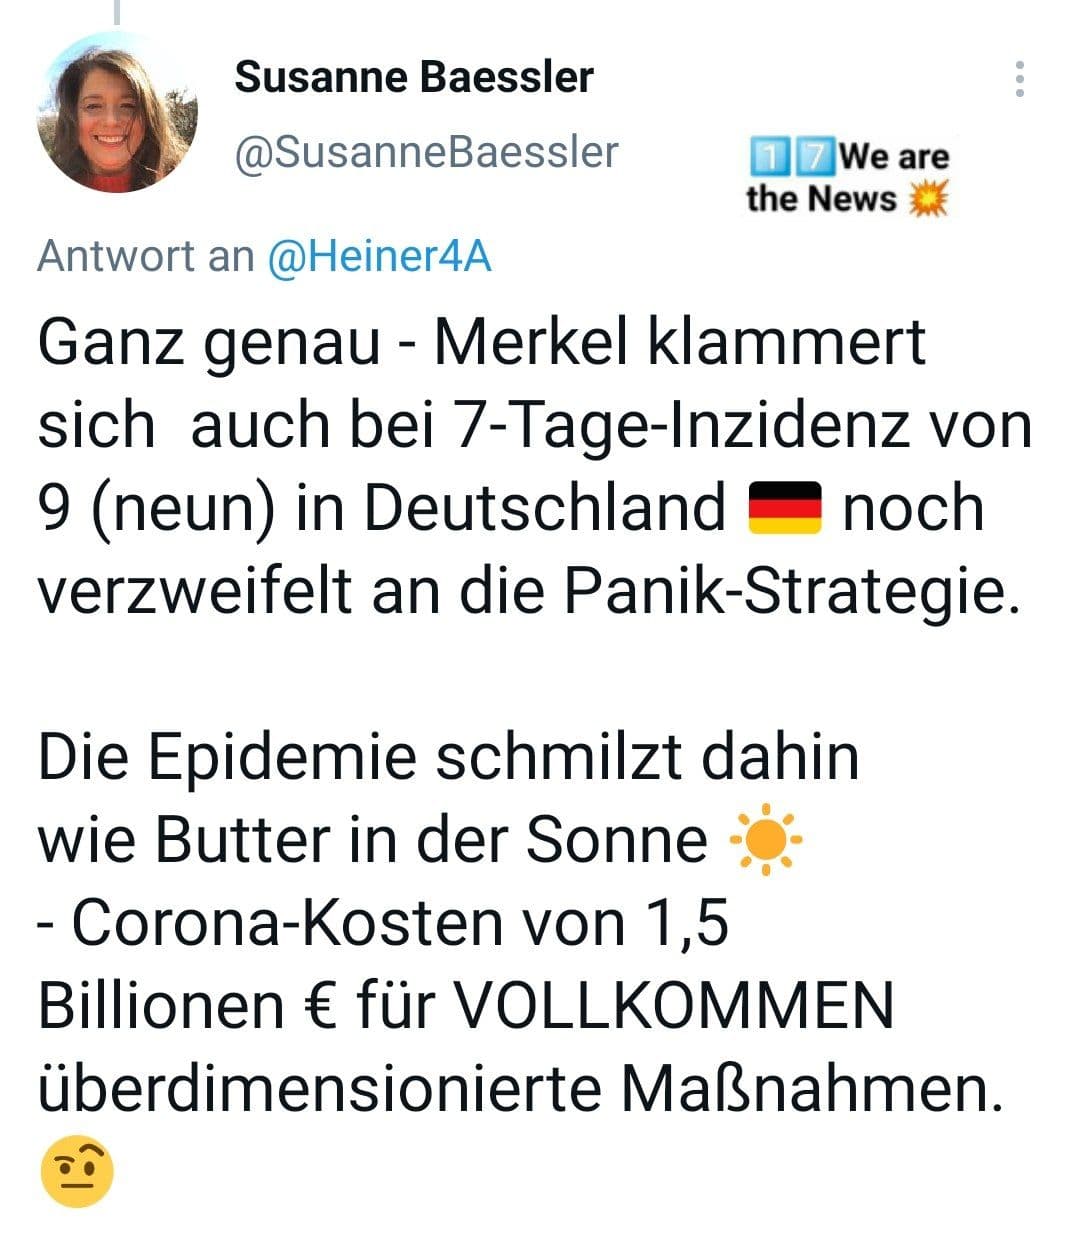 Tweet v. Susanne Baessler: Merkel und die Epidemie